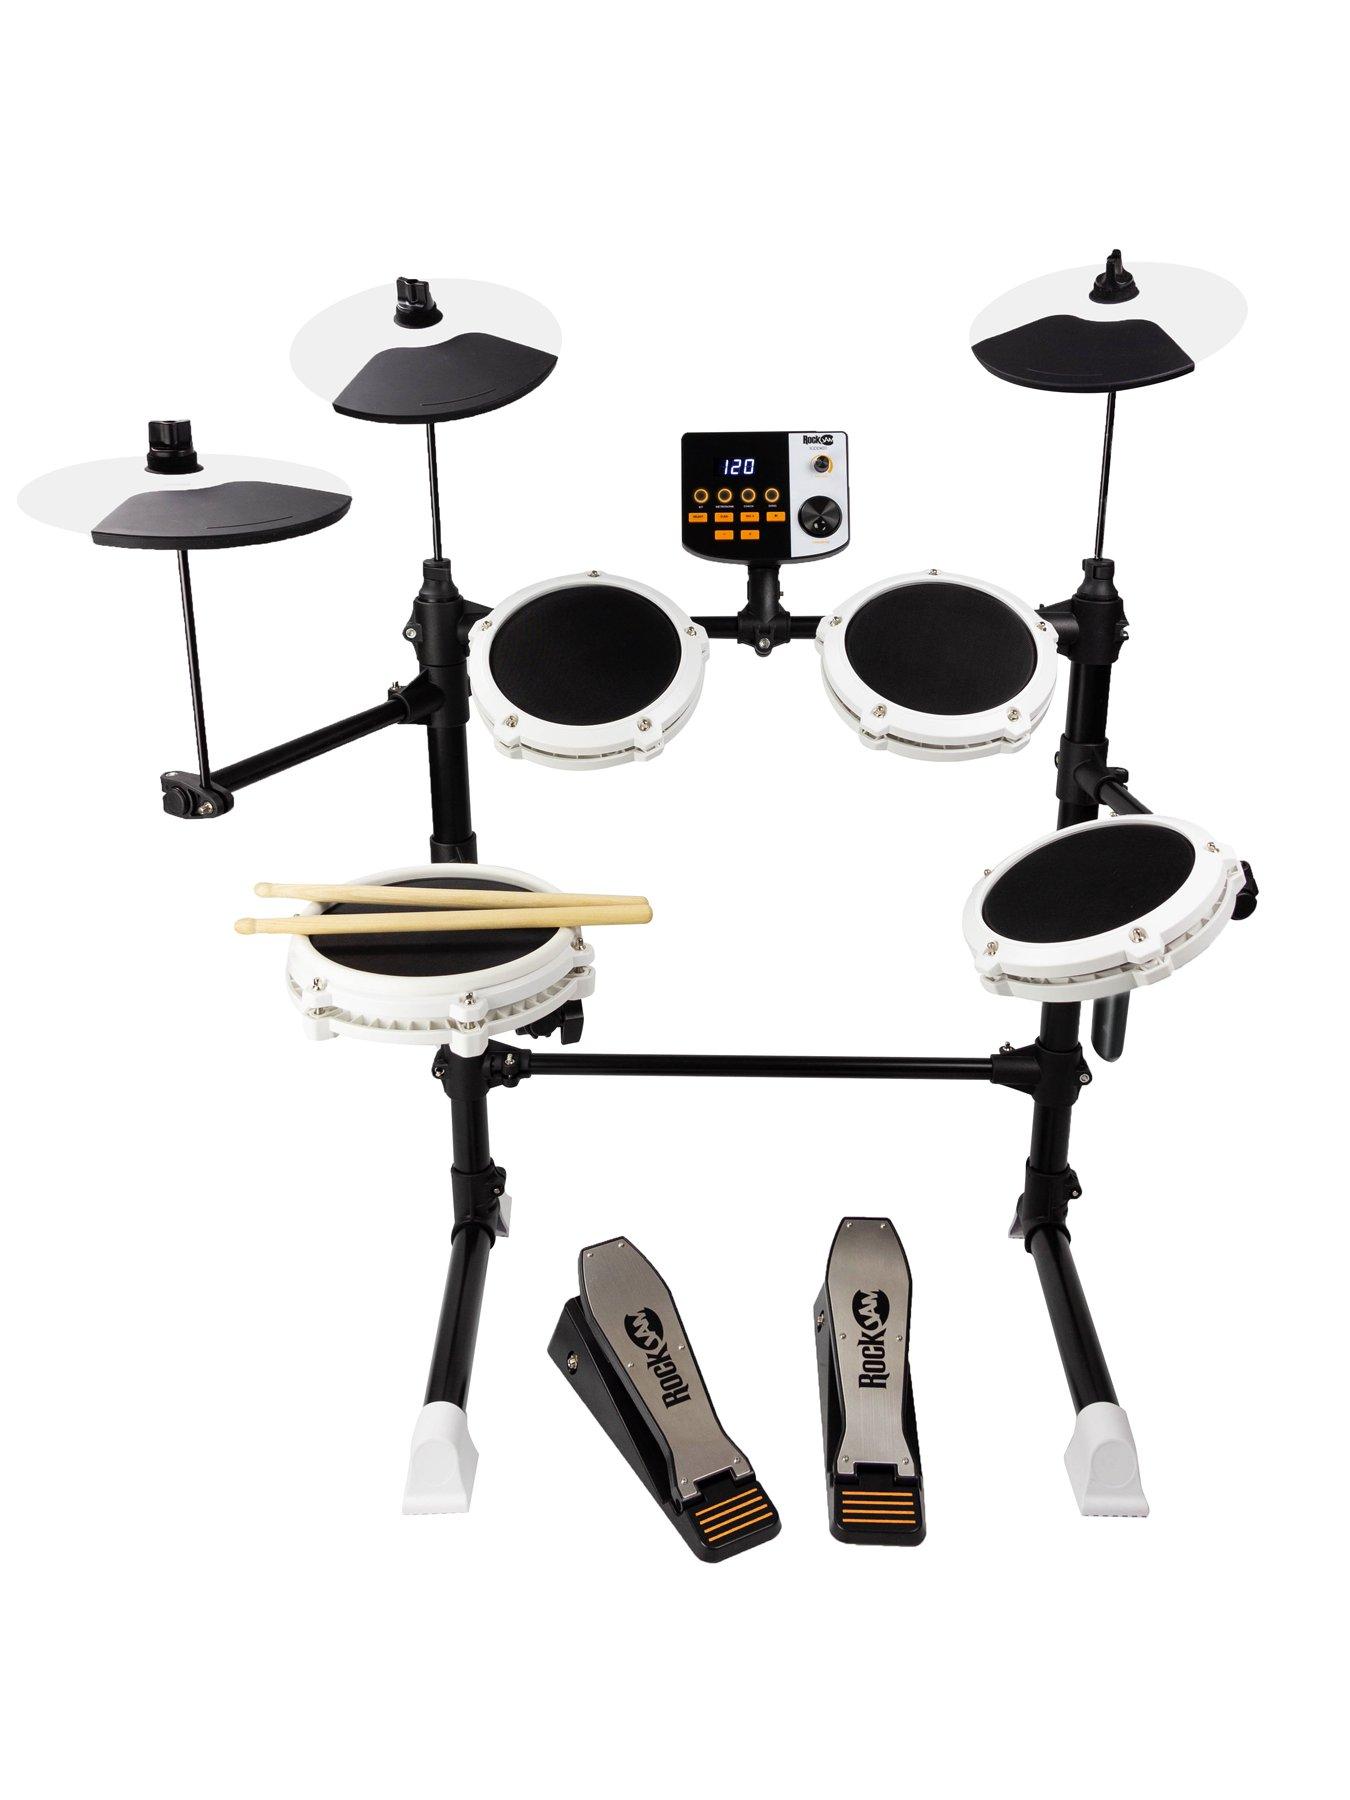 Aerodrums Portable Electronic Drum Set - Air Drum Sticks & Pedals -  Practice Drum Accessory more Quiet than Pads - Full Midi Electric Drum Kit  that